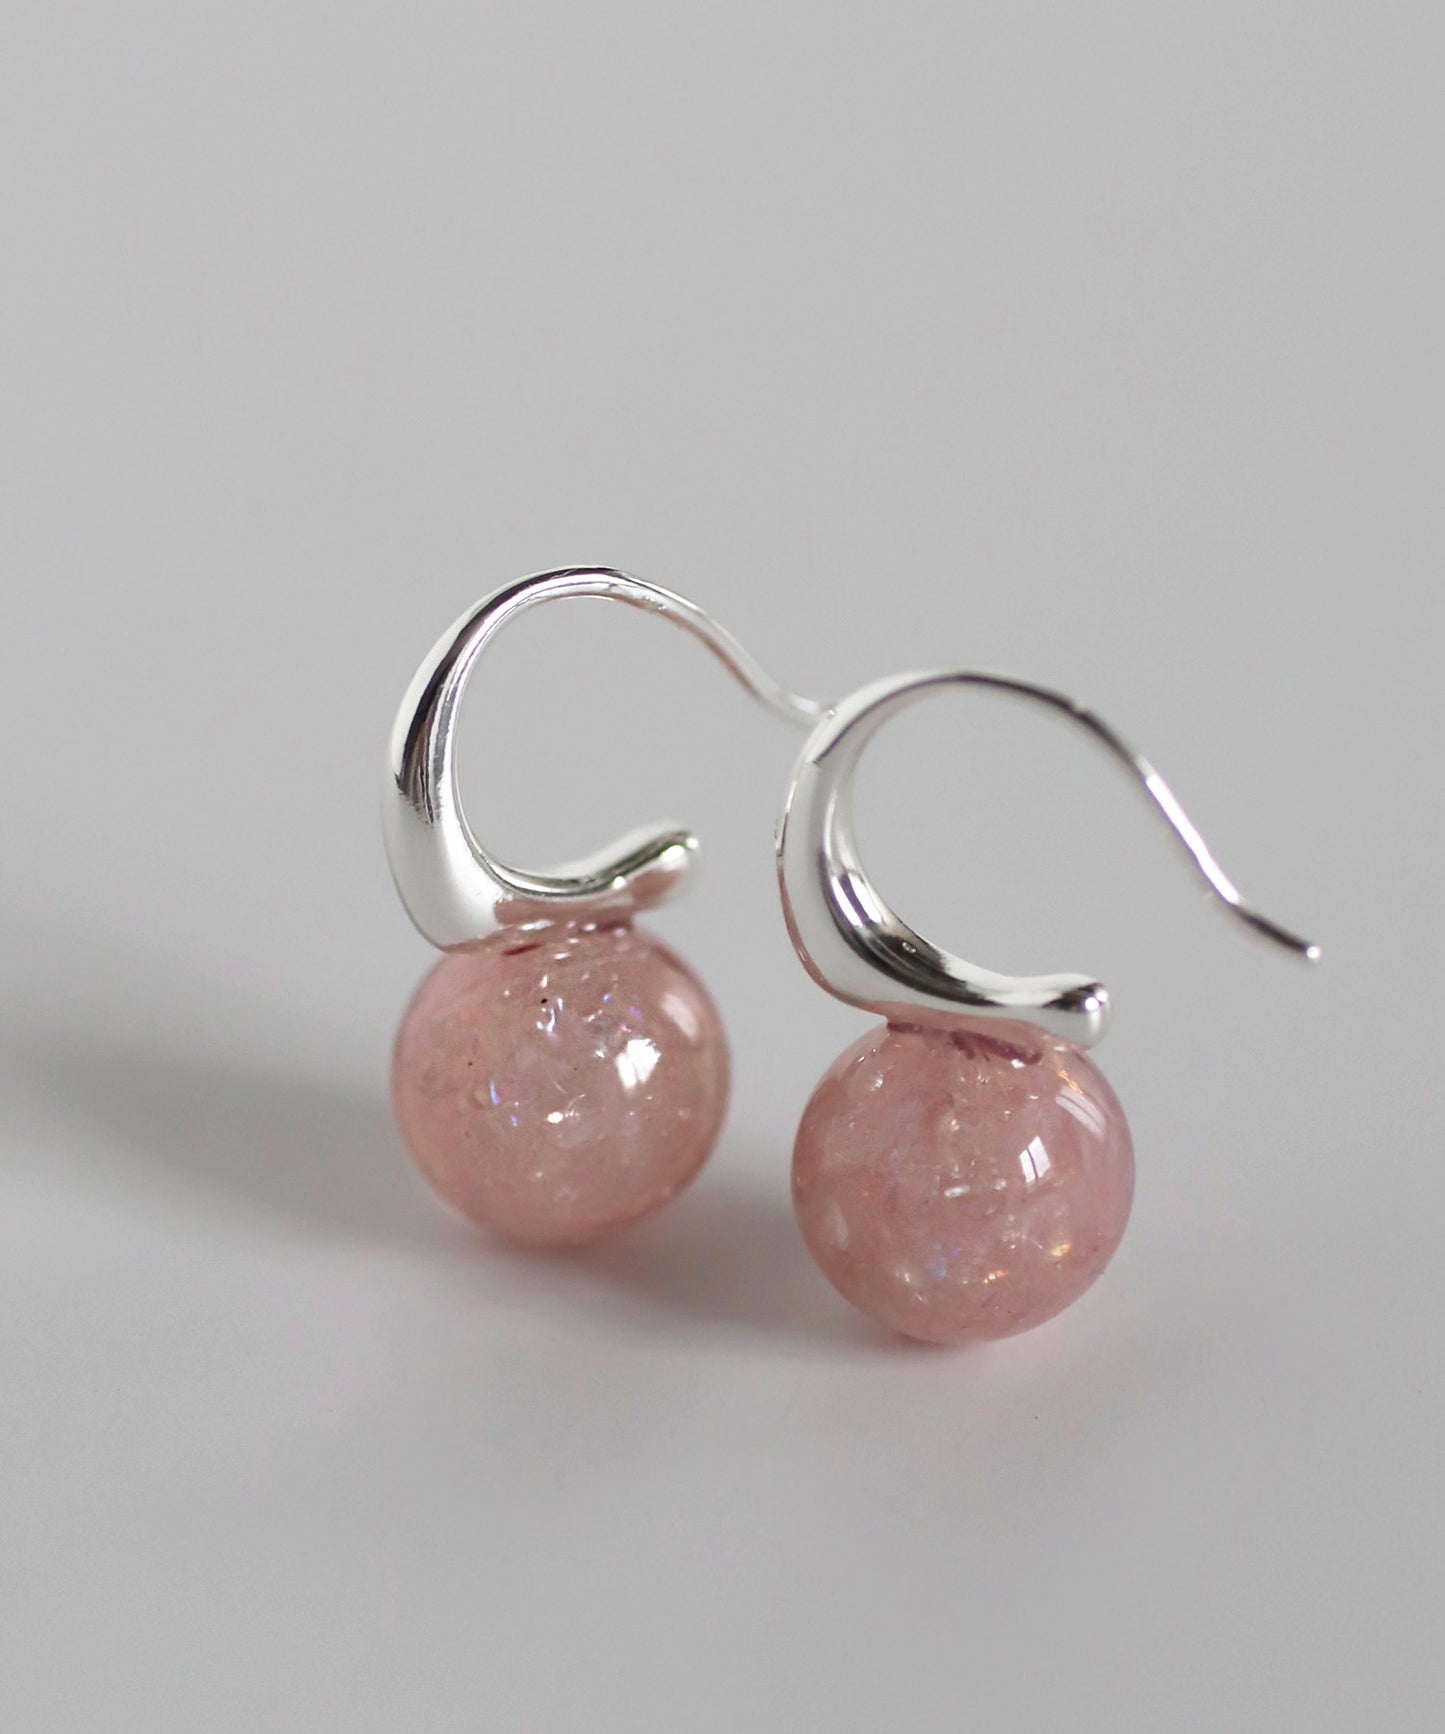 Color Stone Hook Earrings [Apricot]